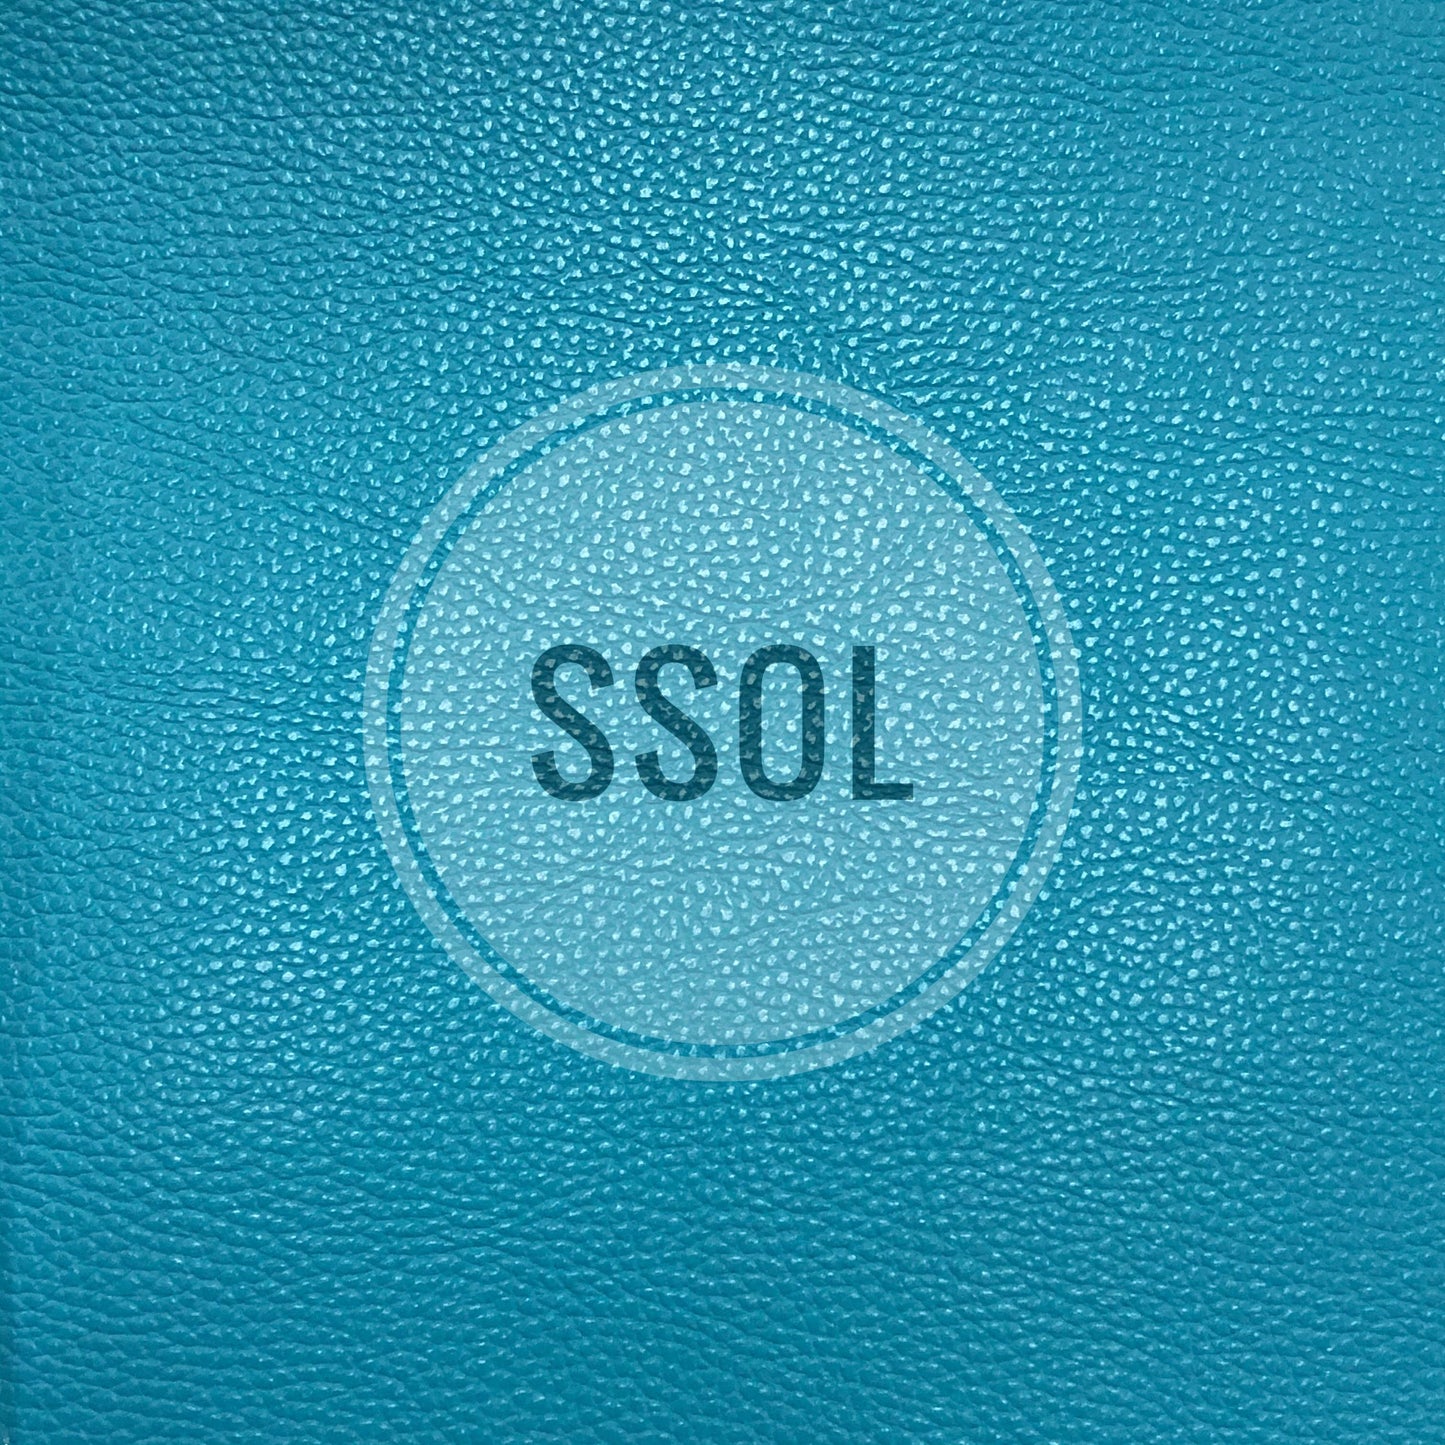 Vinyl/PU Leather - Plain Solids Textured 16 (Sky Blue)